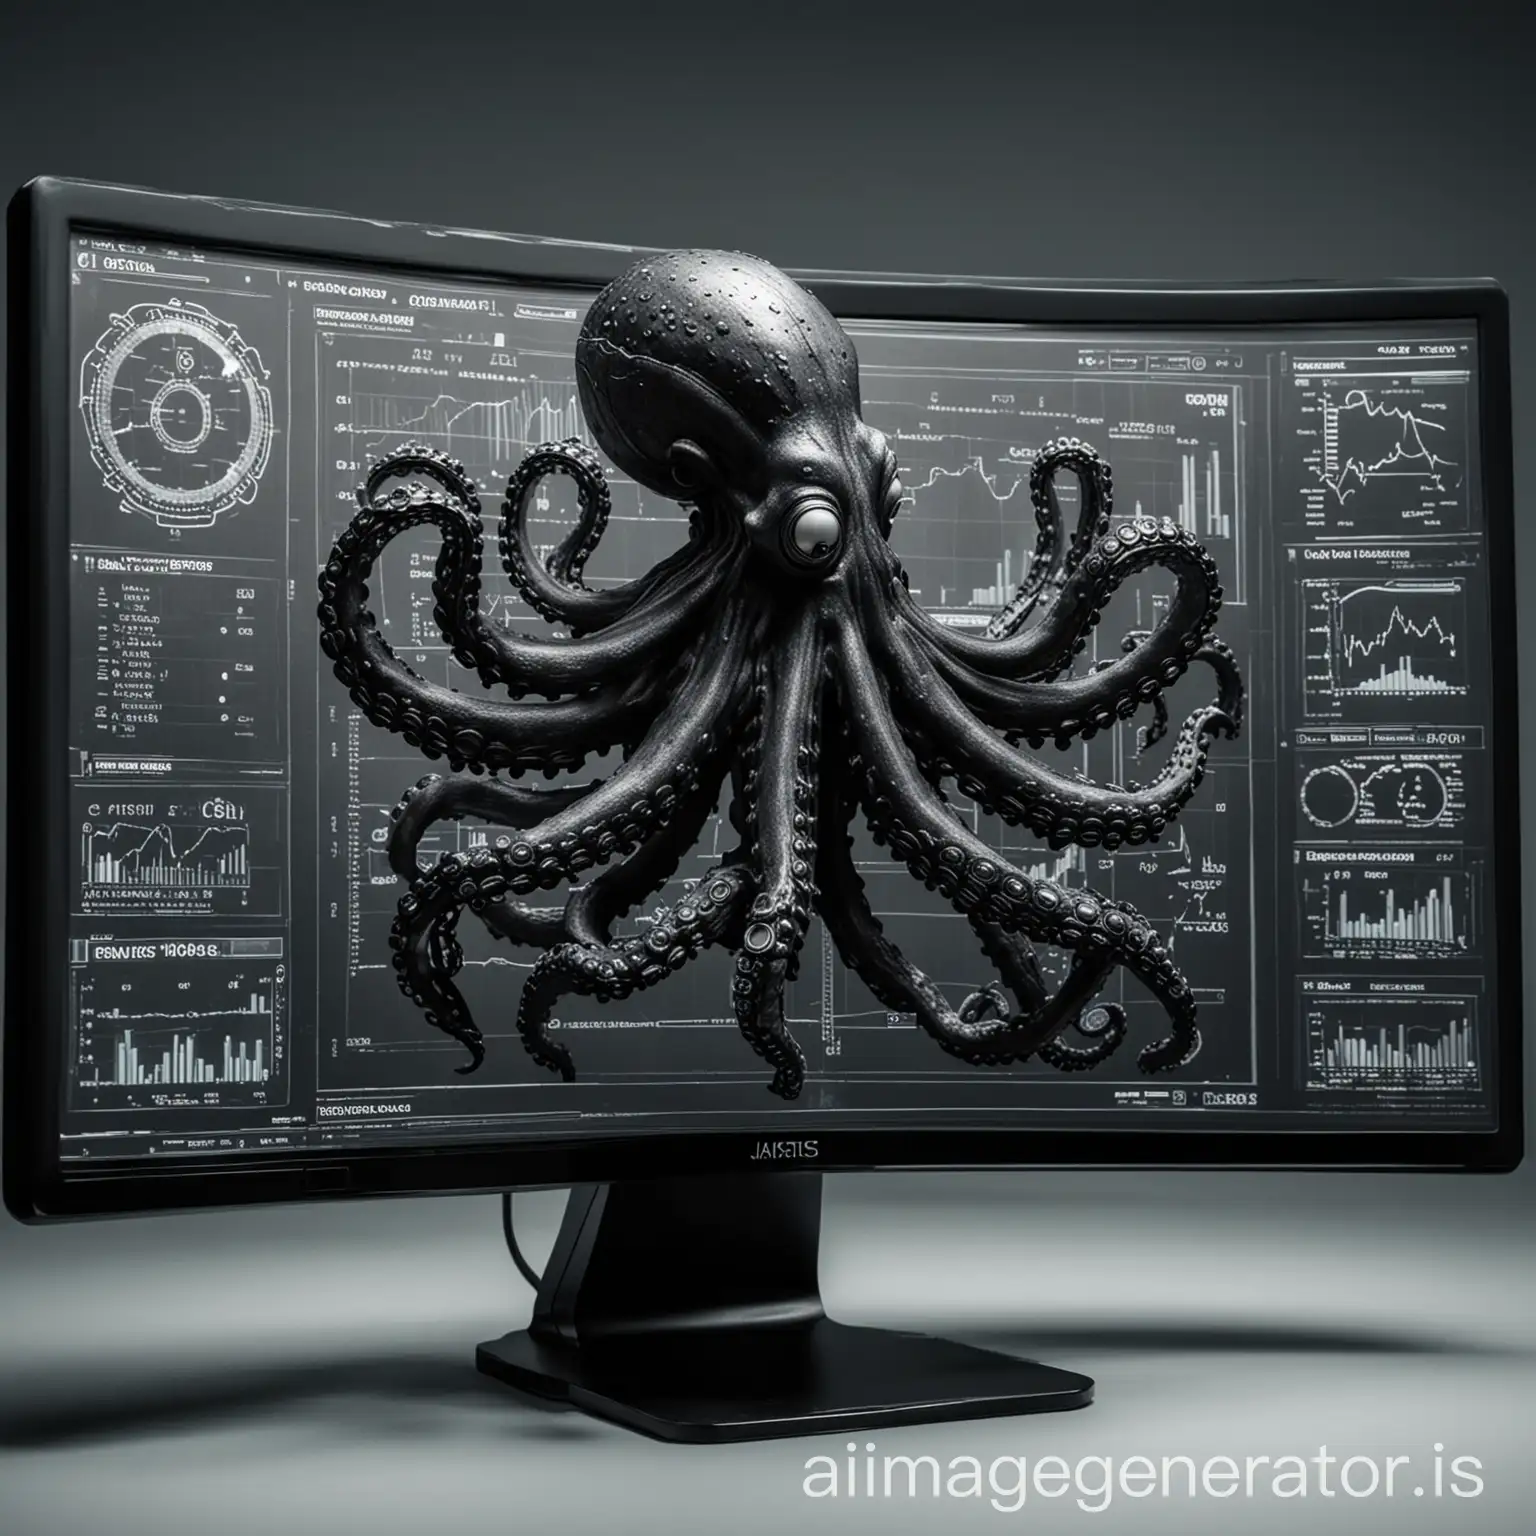 Black-Mechanical-Octopus-on-Computer-Monitor-Analyzing-Data-and-Metrics